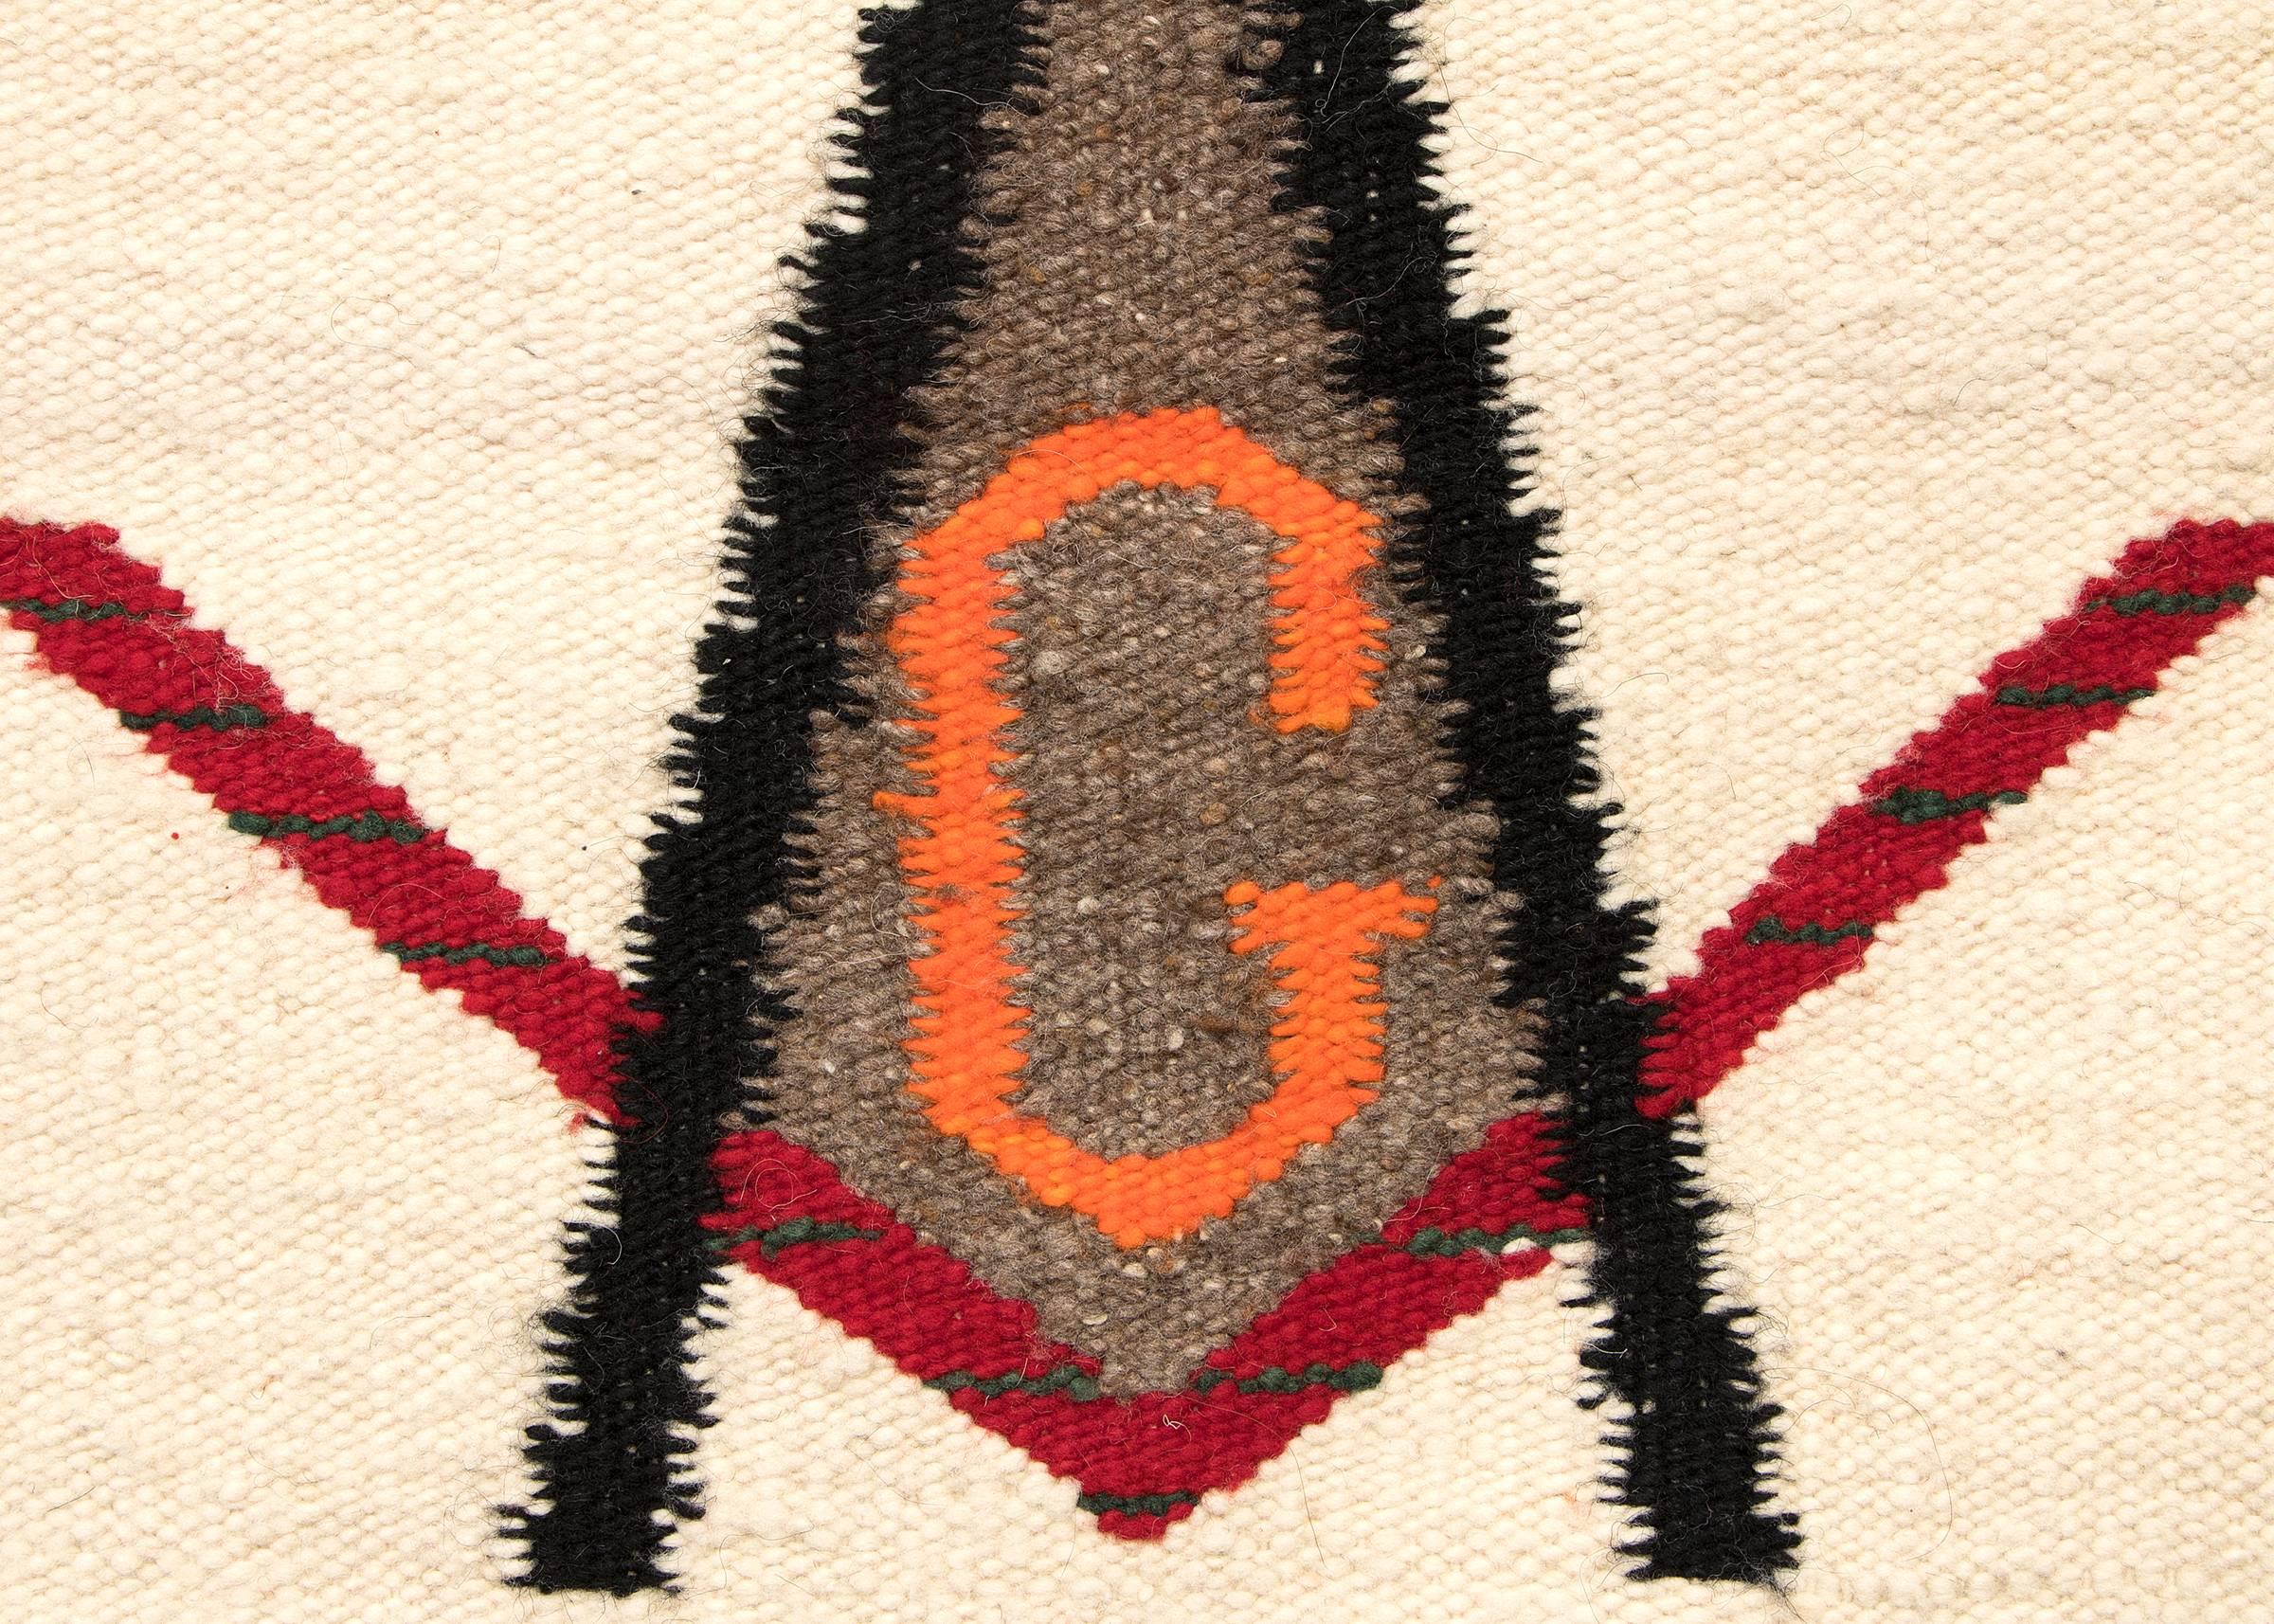 Native American Vintage Navajo Pictorial Sampler Weaving - 